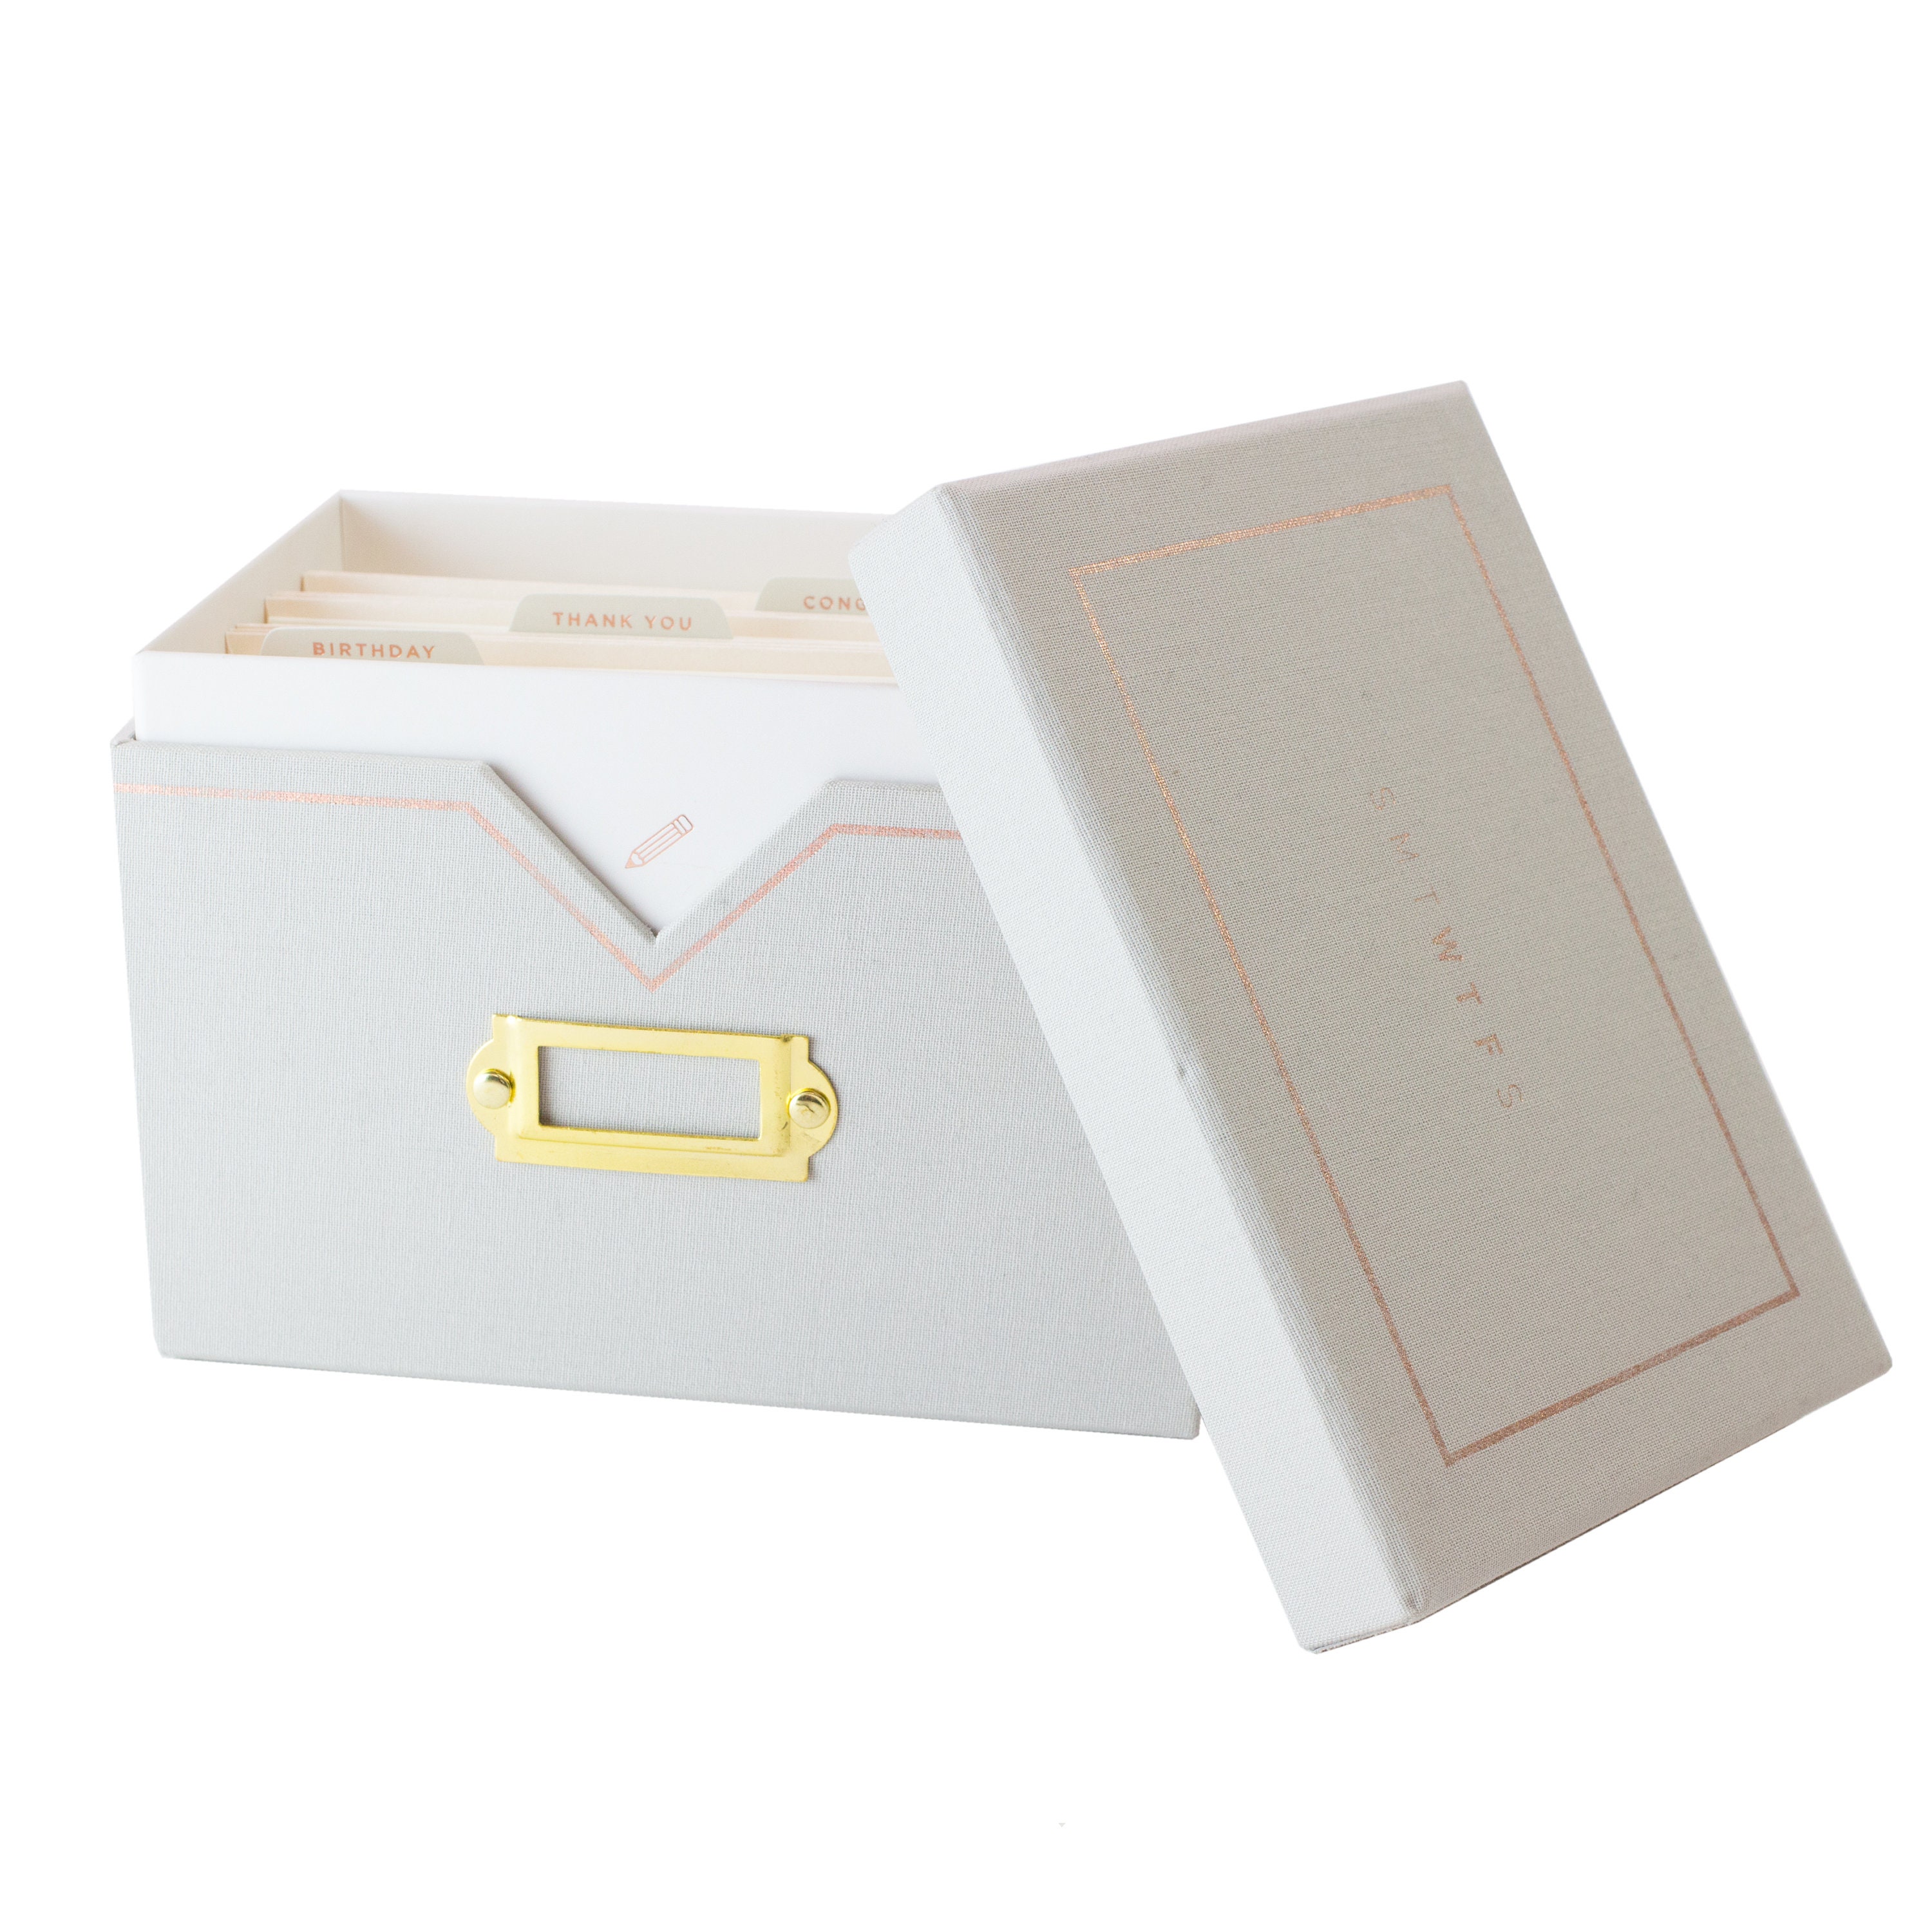 HYGGEHAUS Greeting Card Organizer Box with Dividers - Photo Storage Box,  Birt